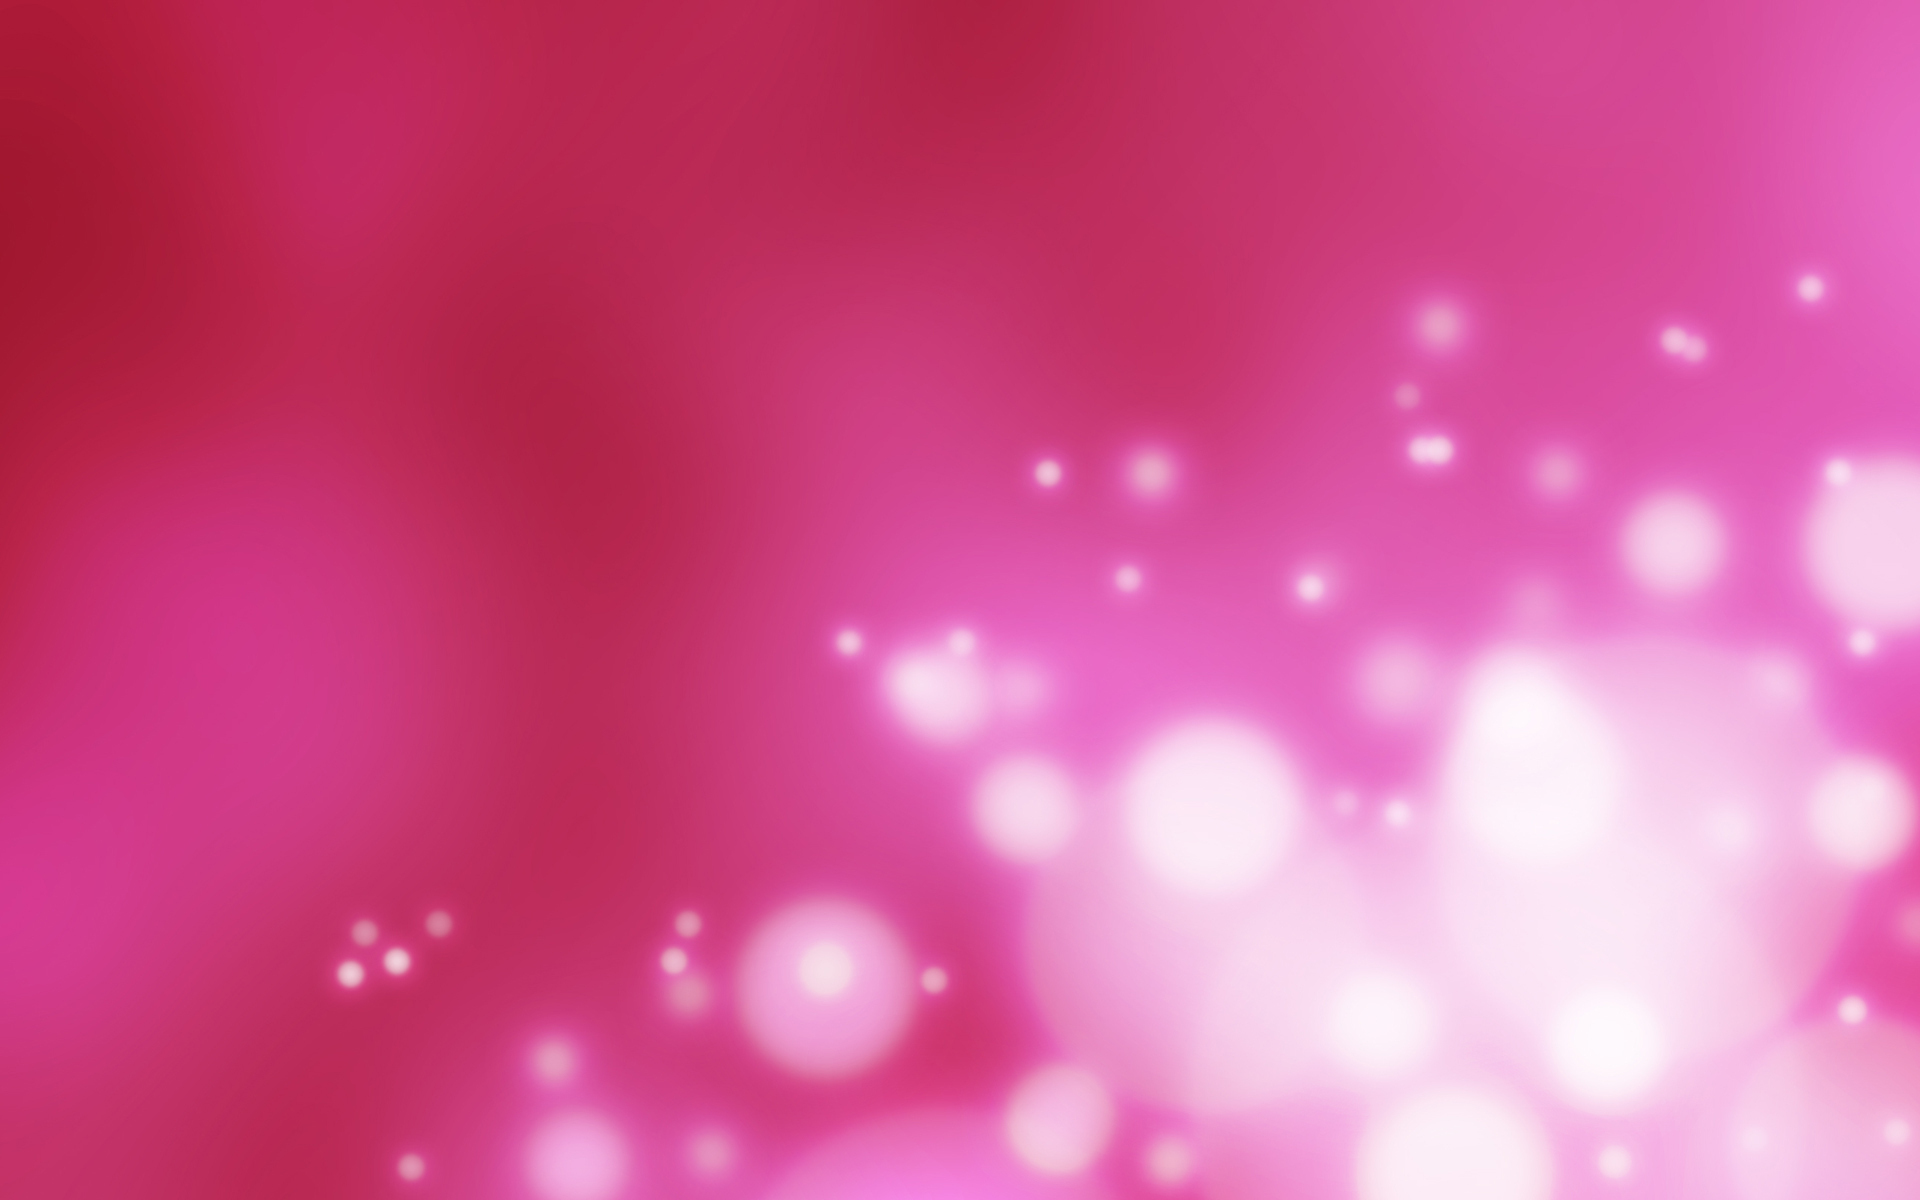 Hot Pink Backgrounds For Desktop 21 Free Hd Wallpaper